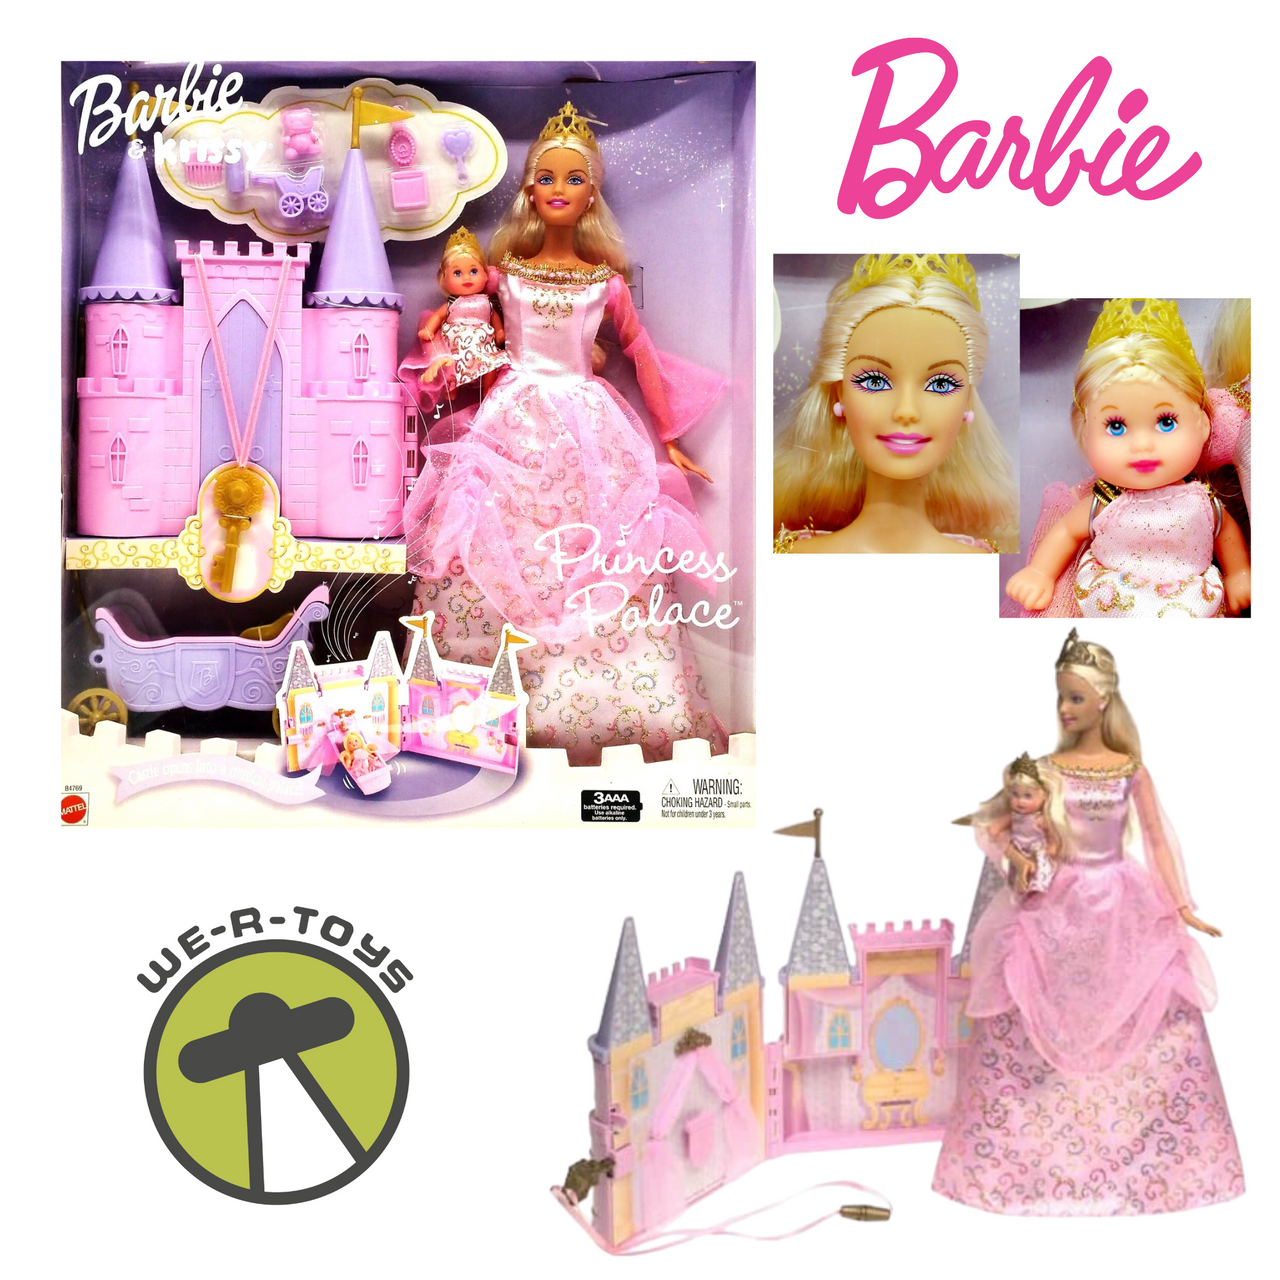 Barbie and Krissy Princess Palace Playset by Barbie 並行輸入品